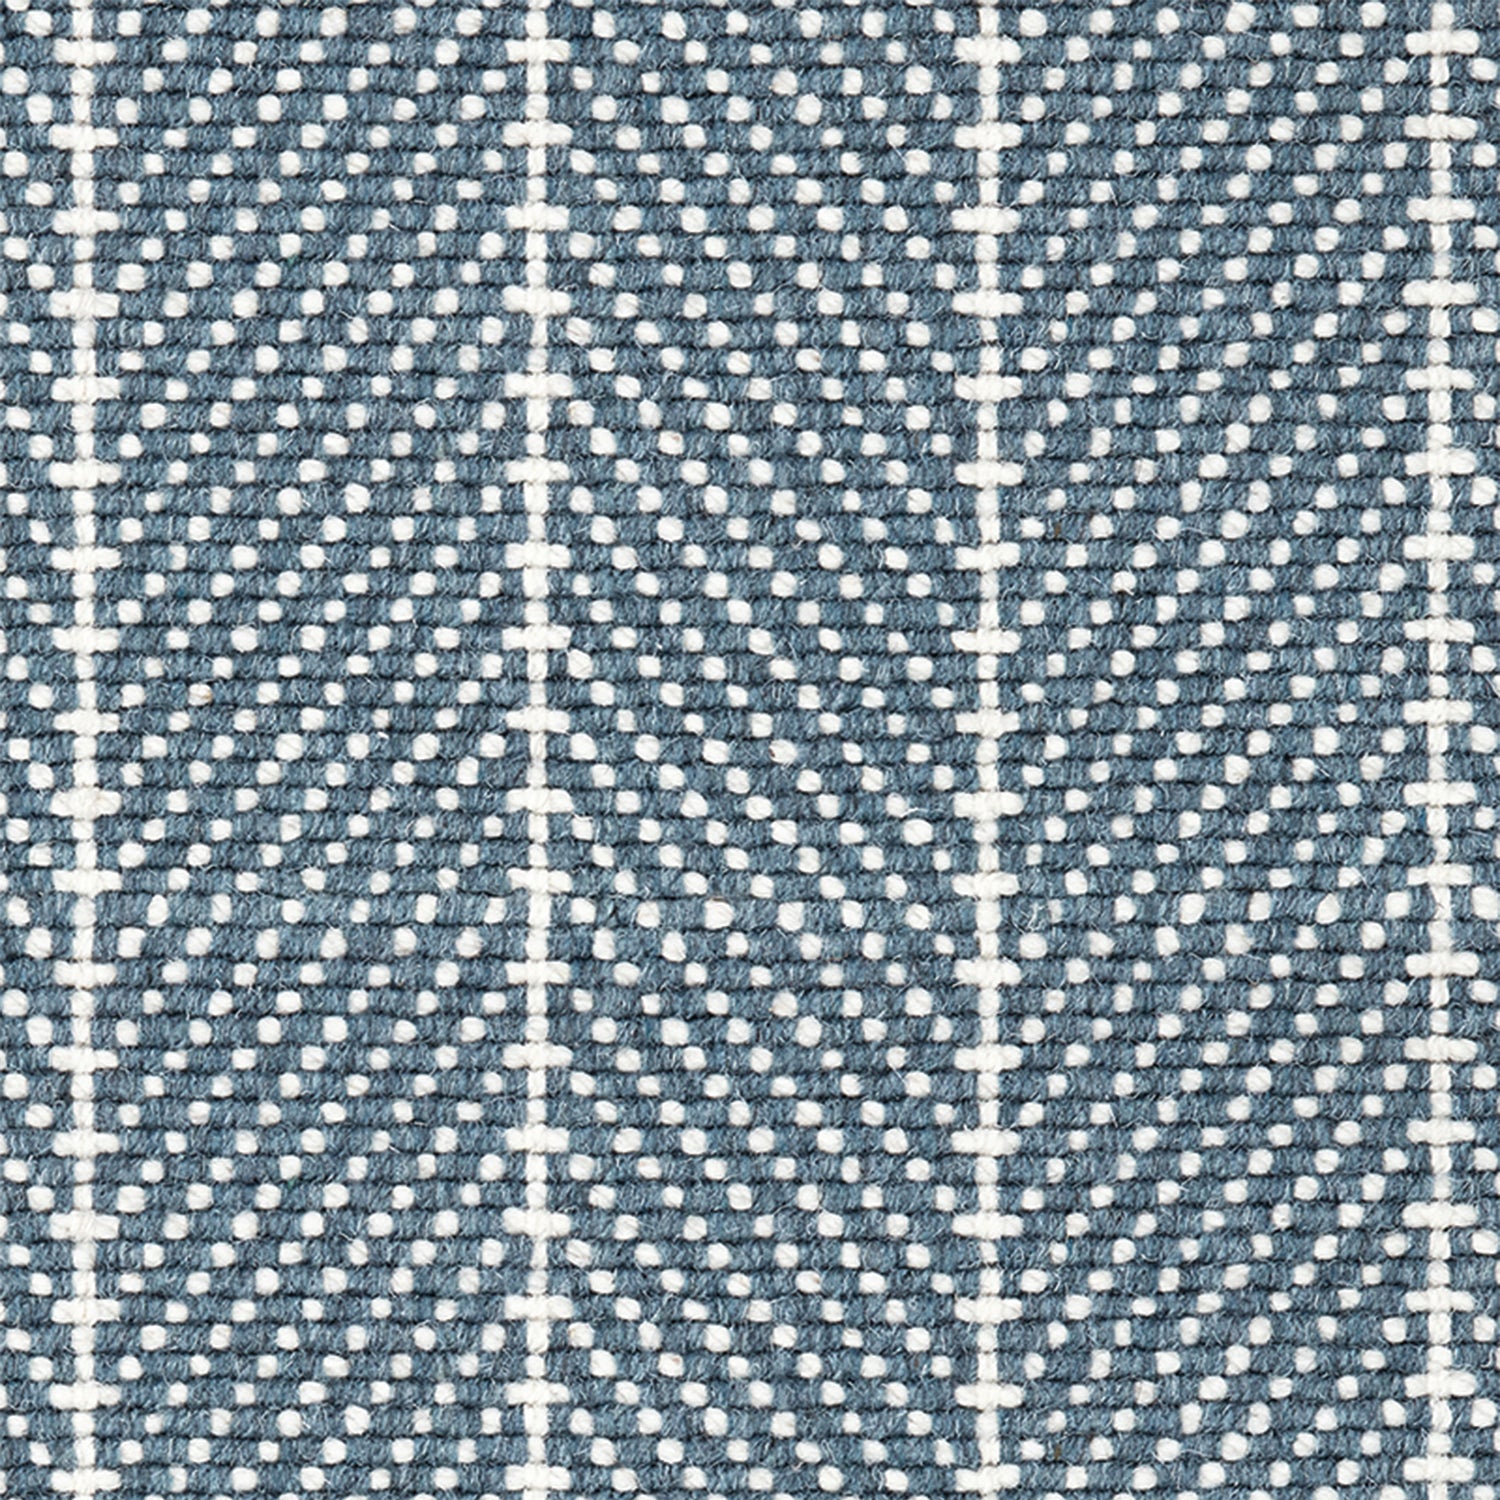 Wool broadloom carpet swatch in a herringbone stripe in gray-blue and white.